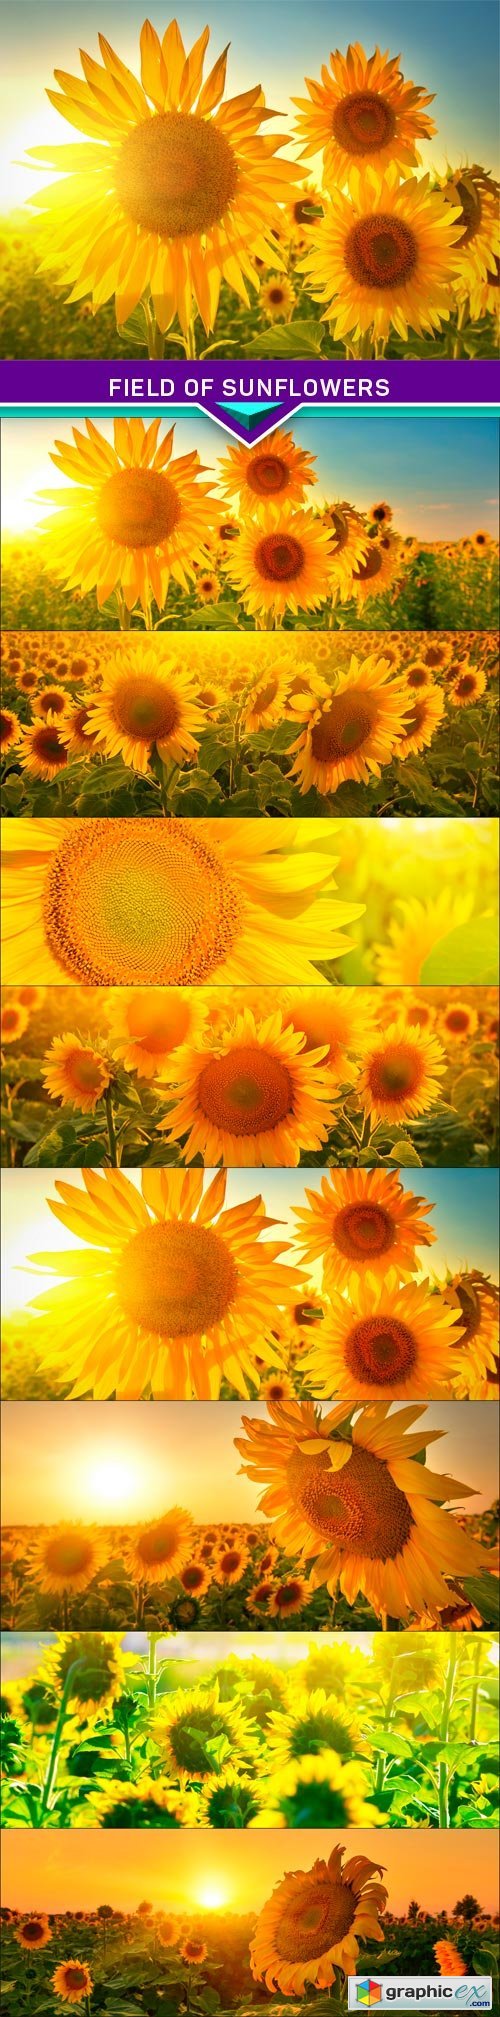 Field of sunflowers 8x JPEG